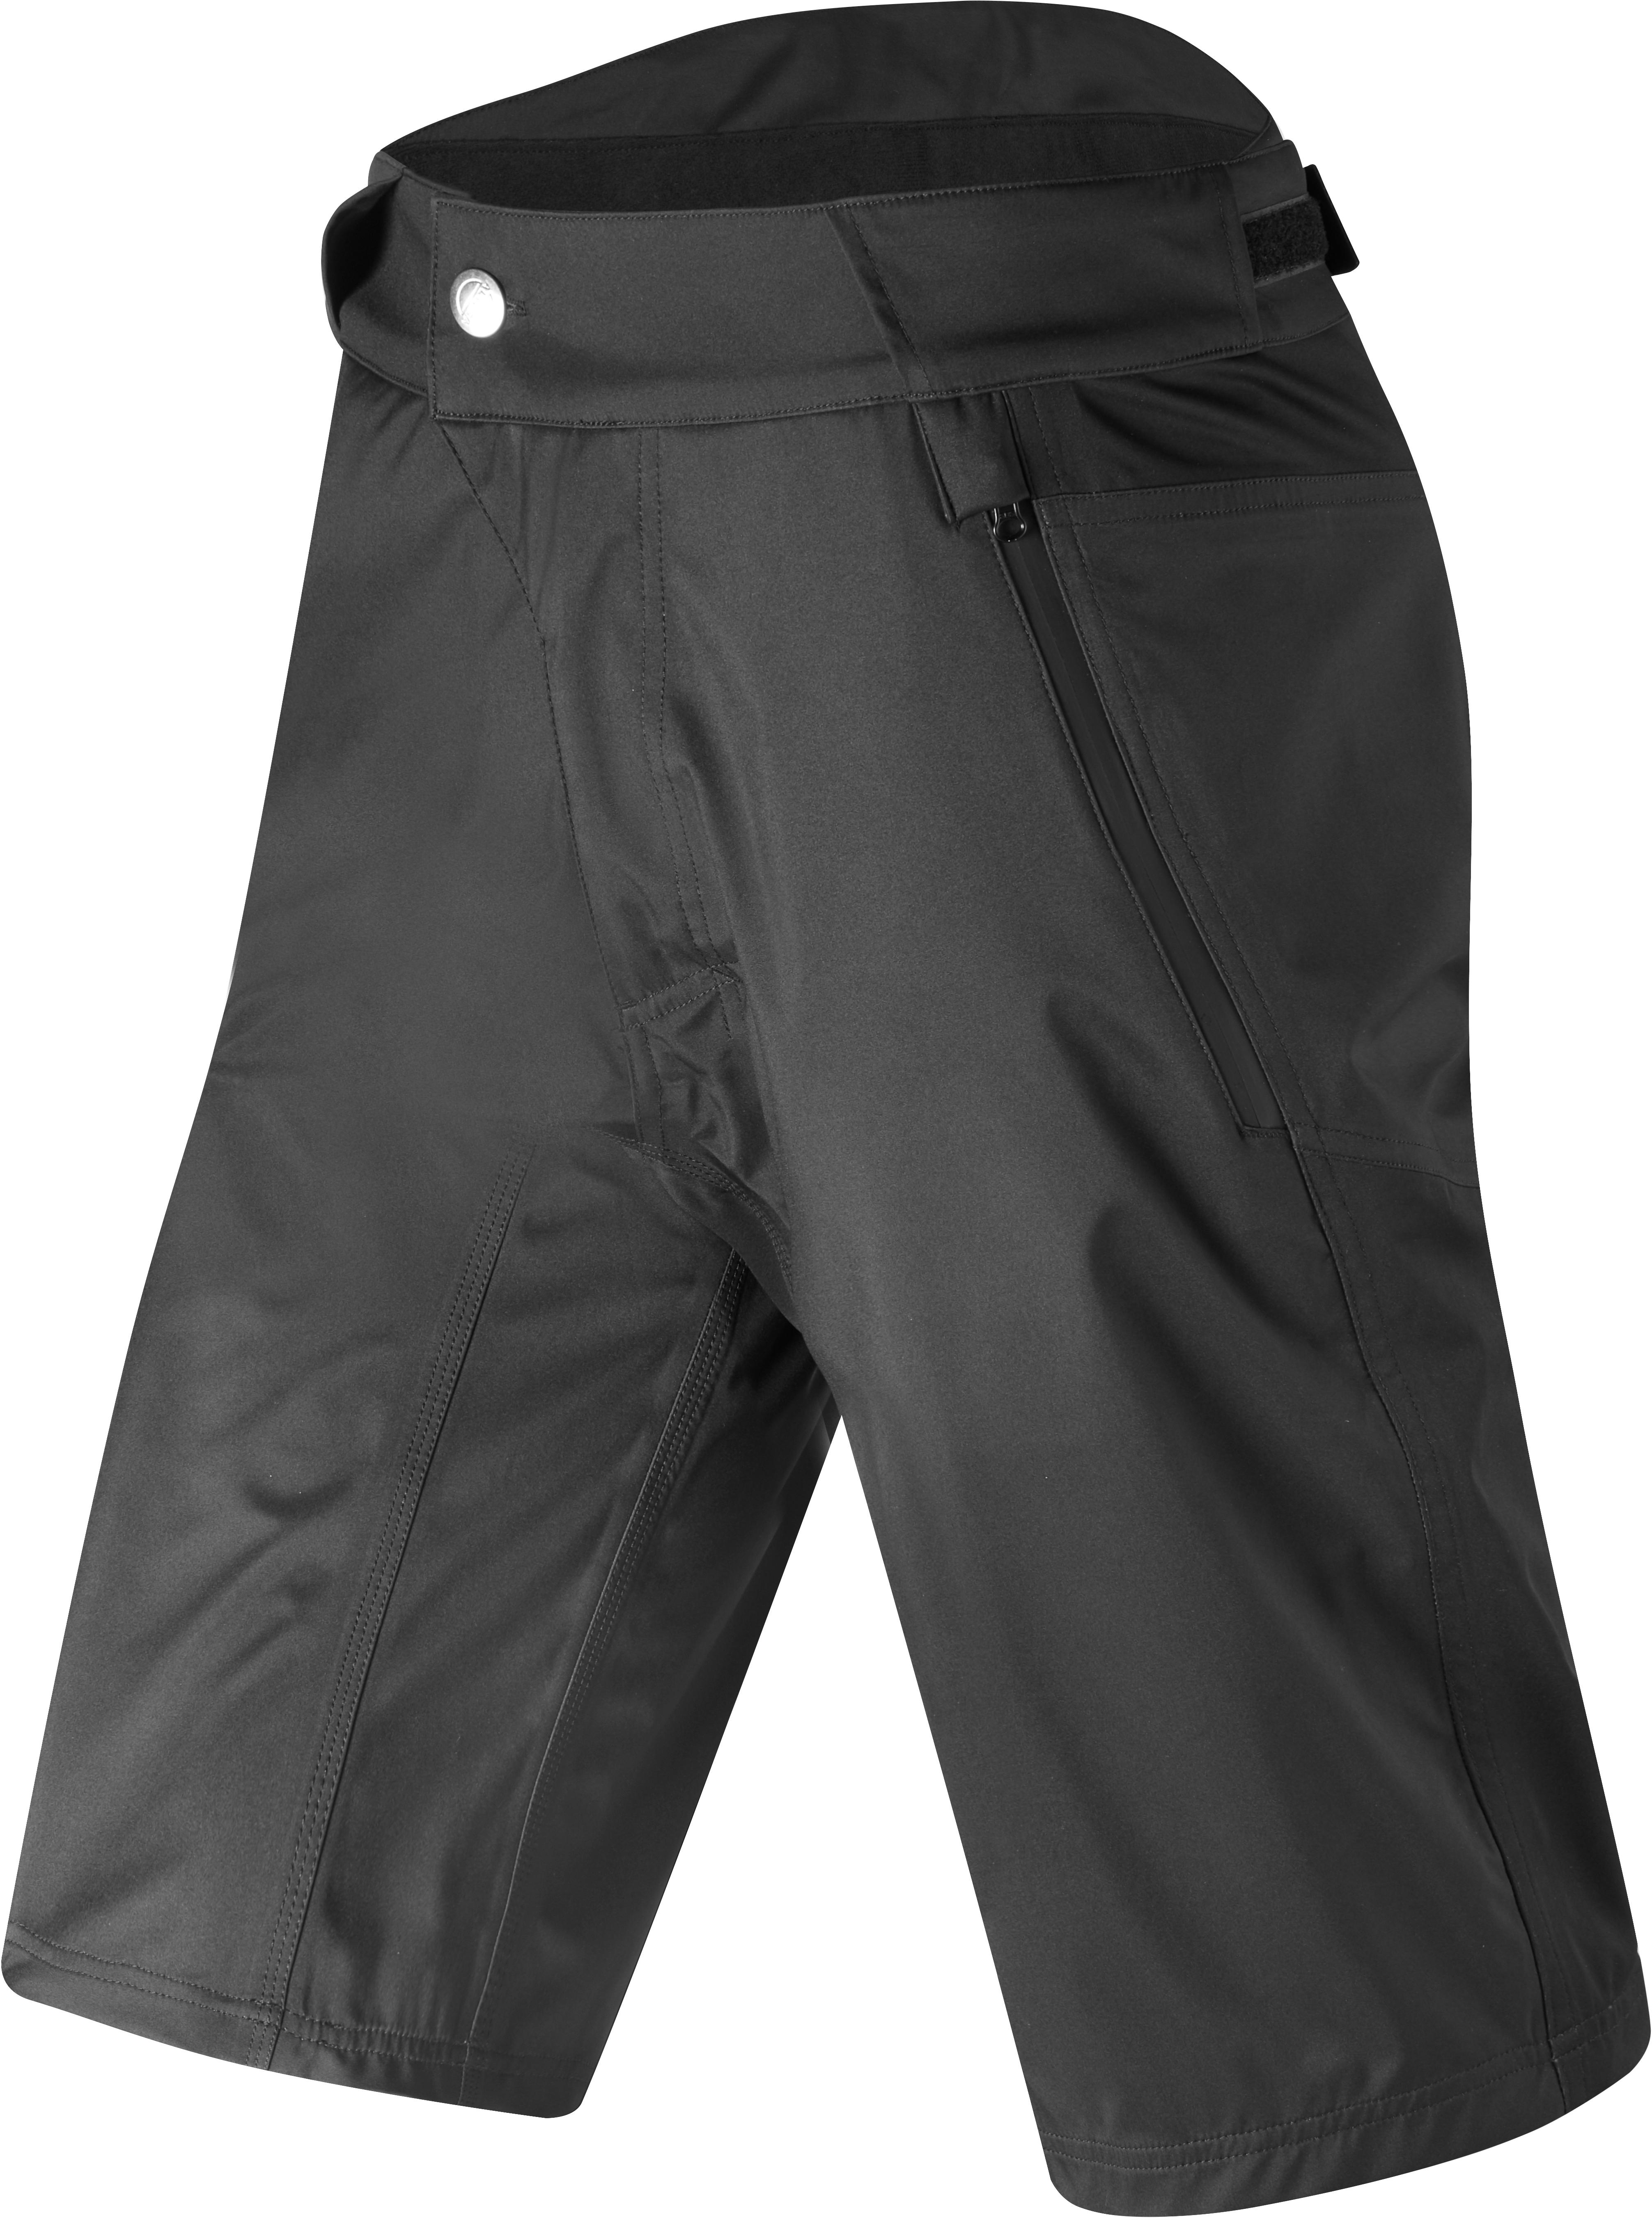 Altura Waterproof Shorts - Black - Small